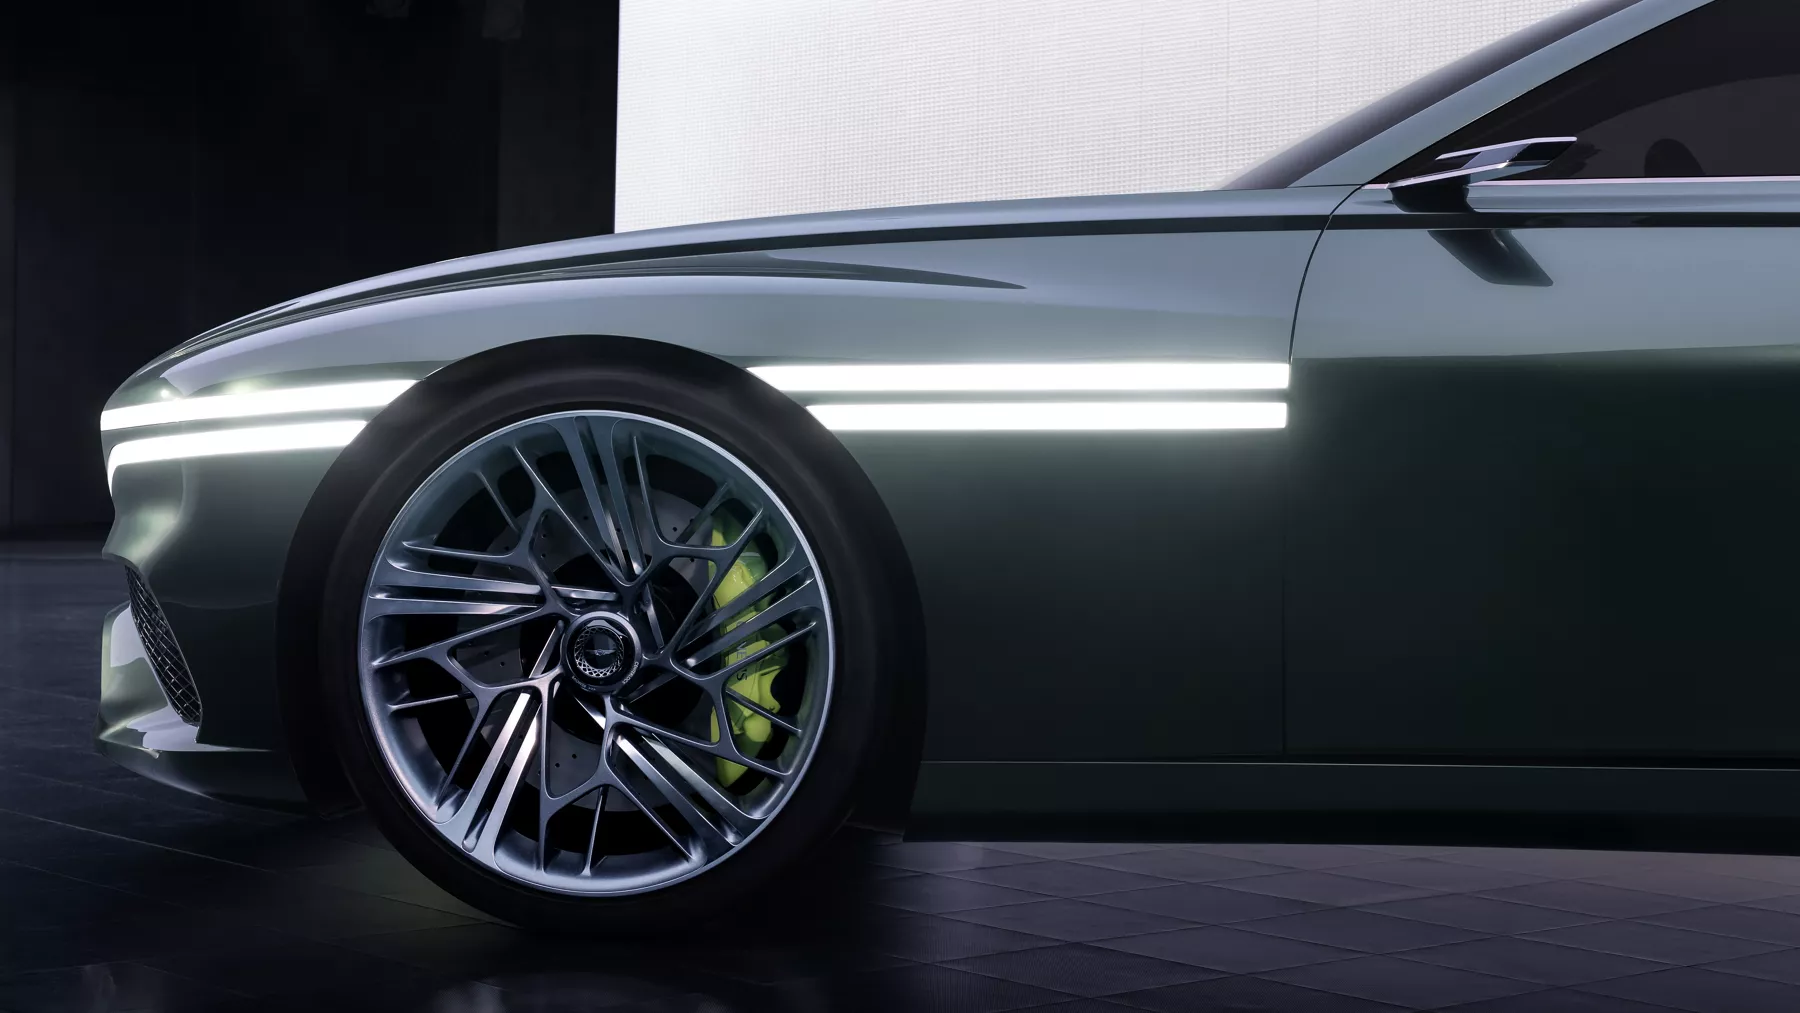 X Speedium Coupe Concept front wheel and illuminated headlight.